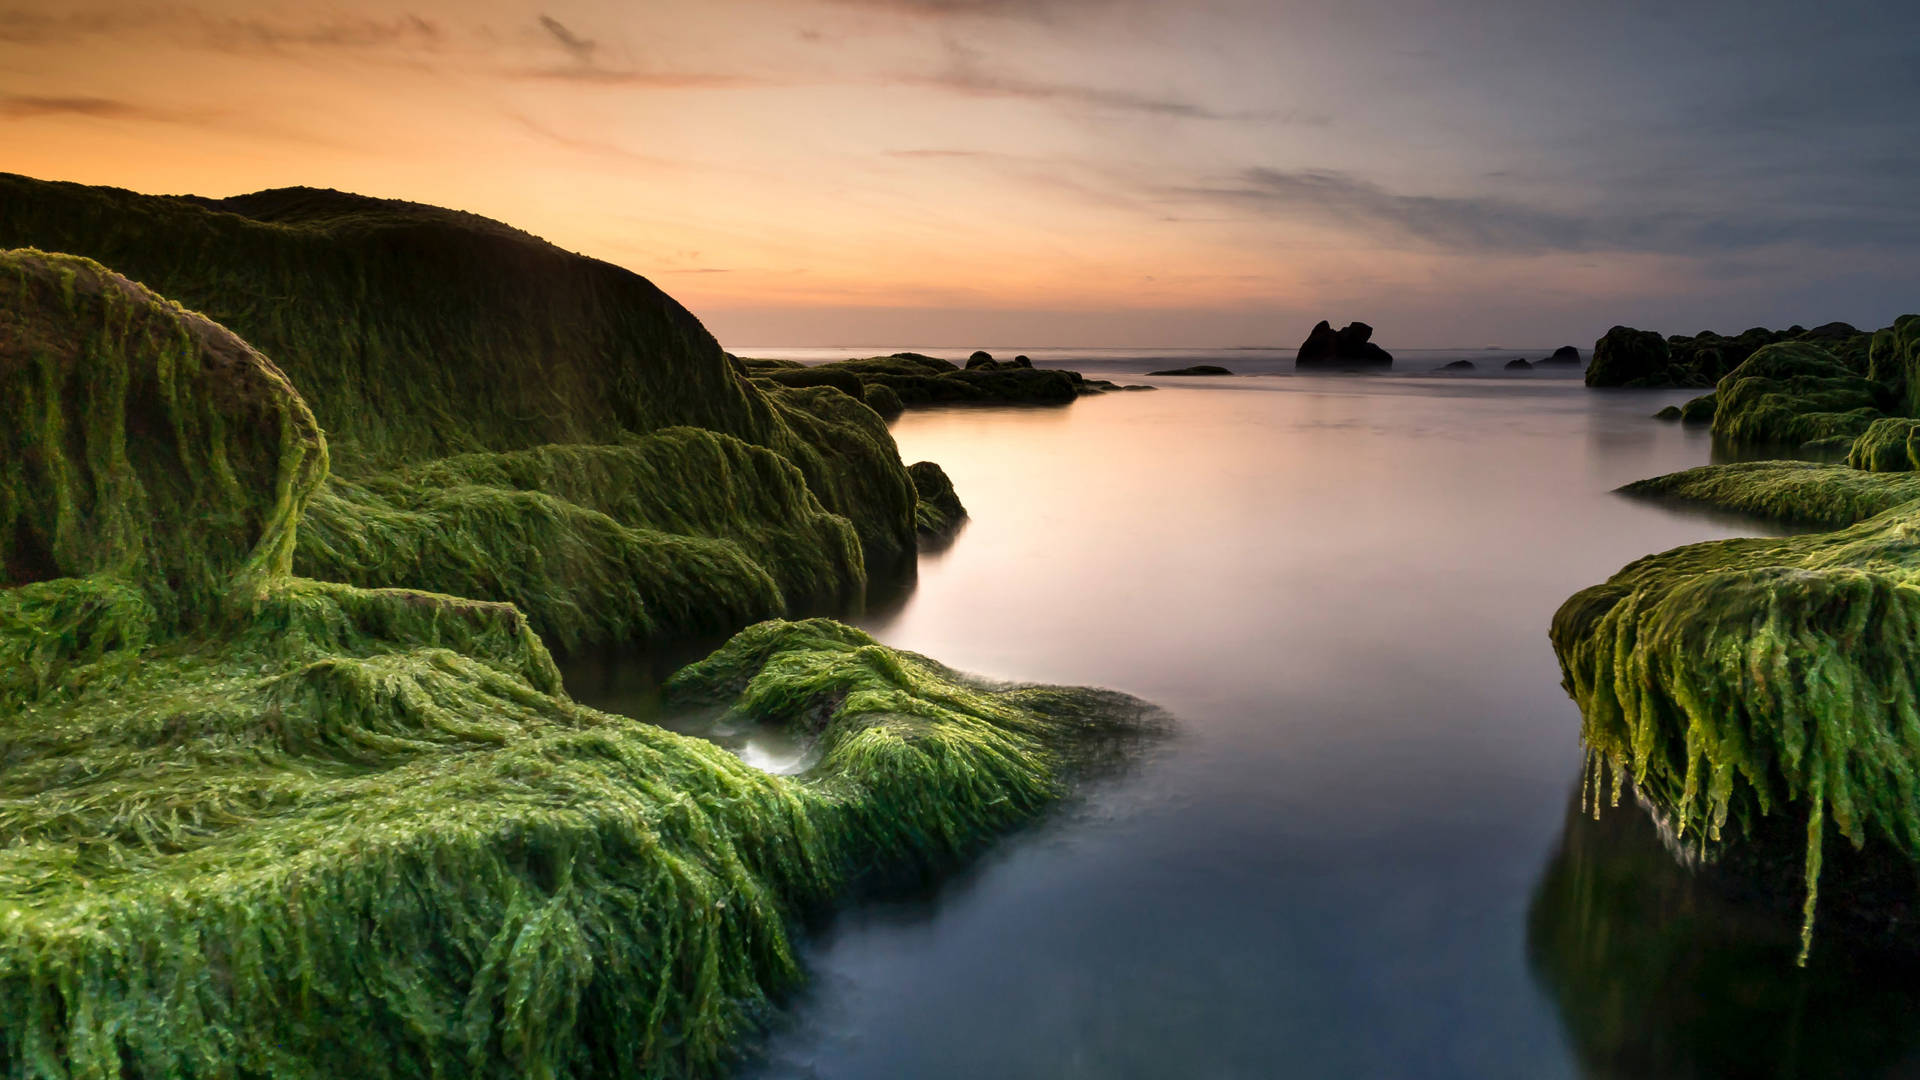 Algae-covered rocks by the sea